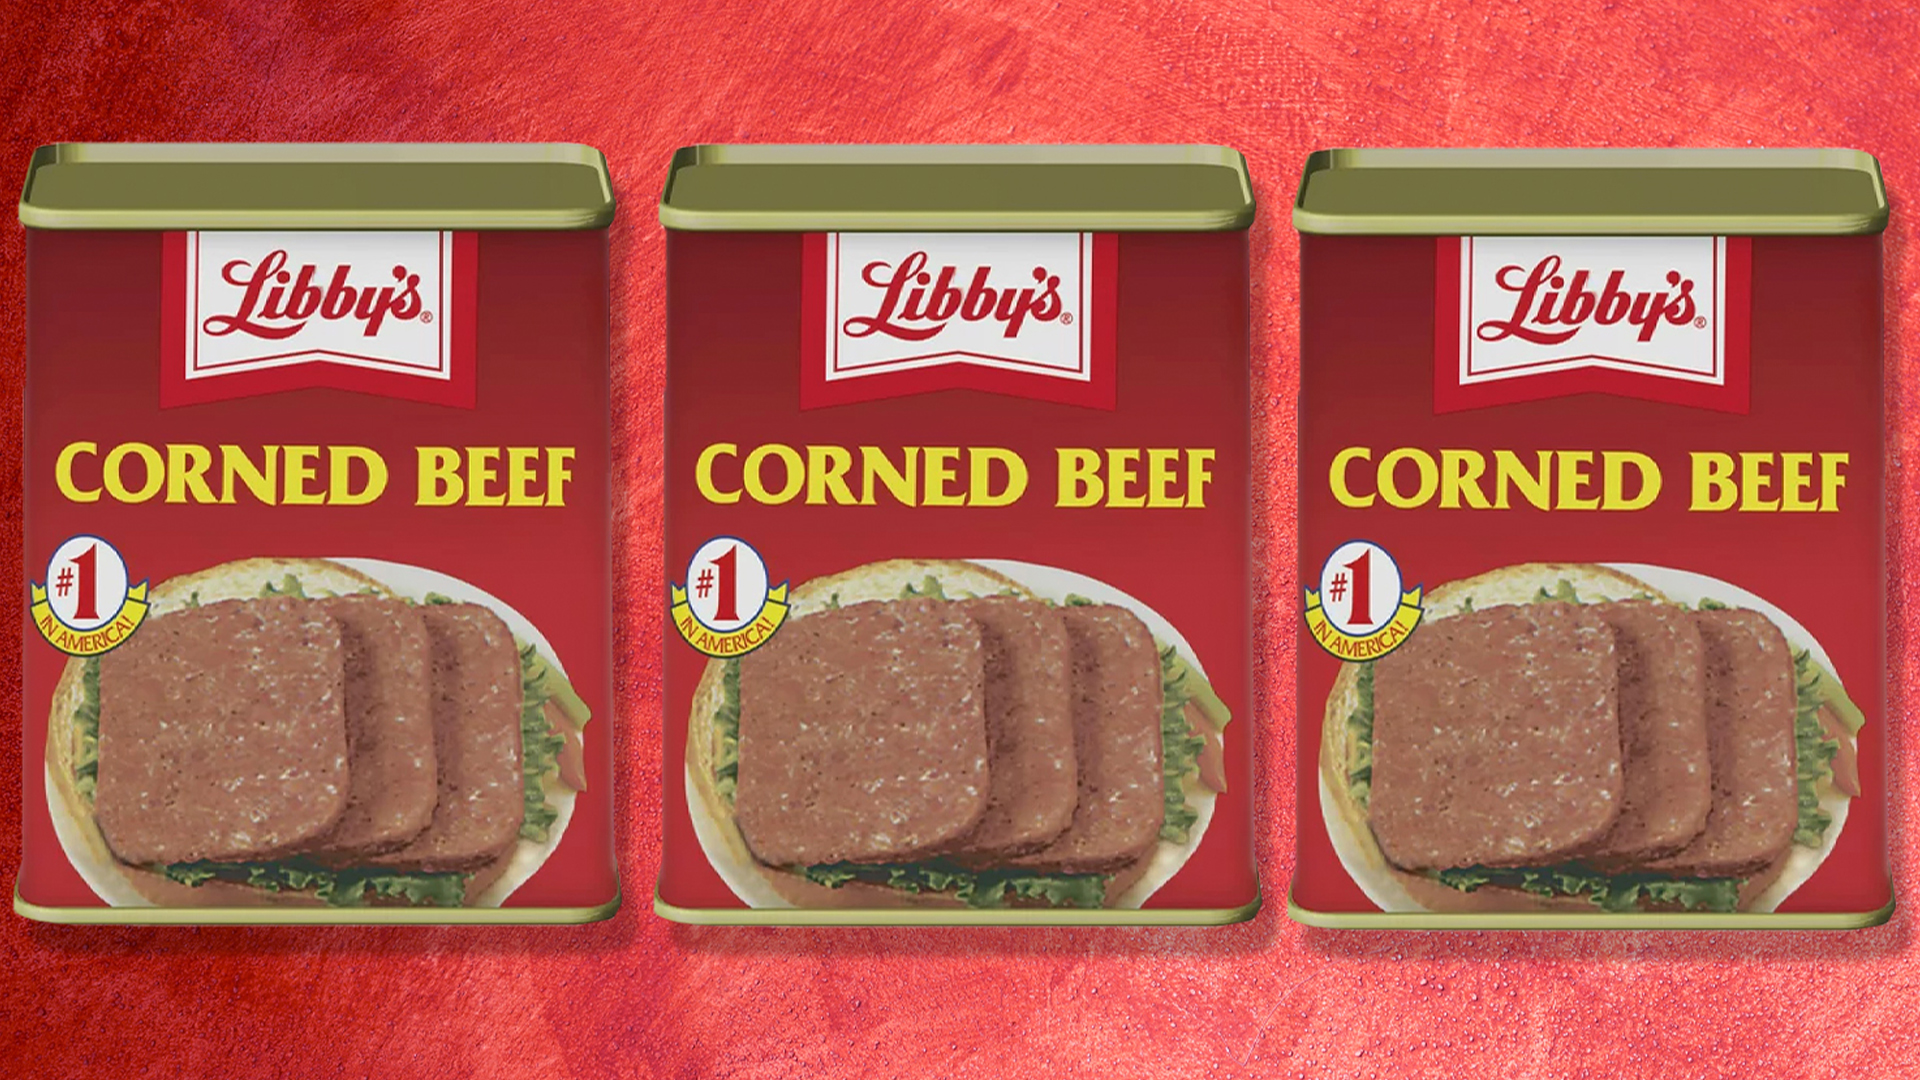 kc corned beef plat